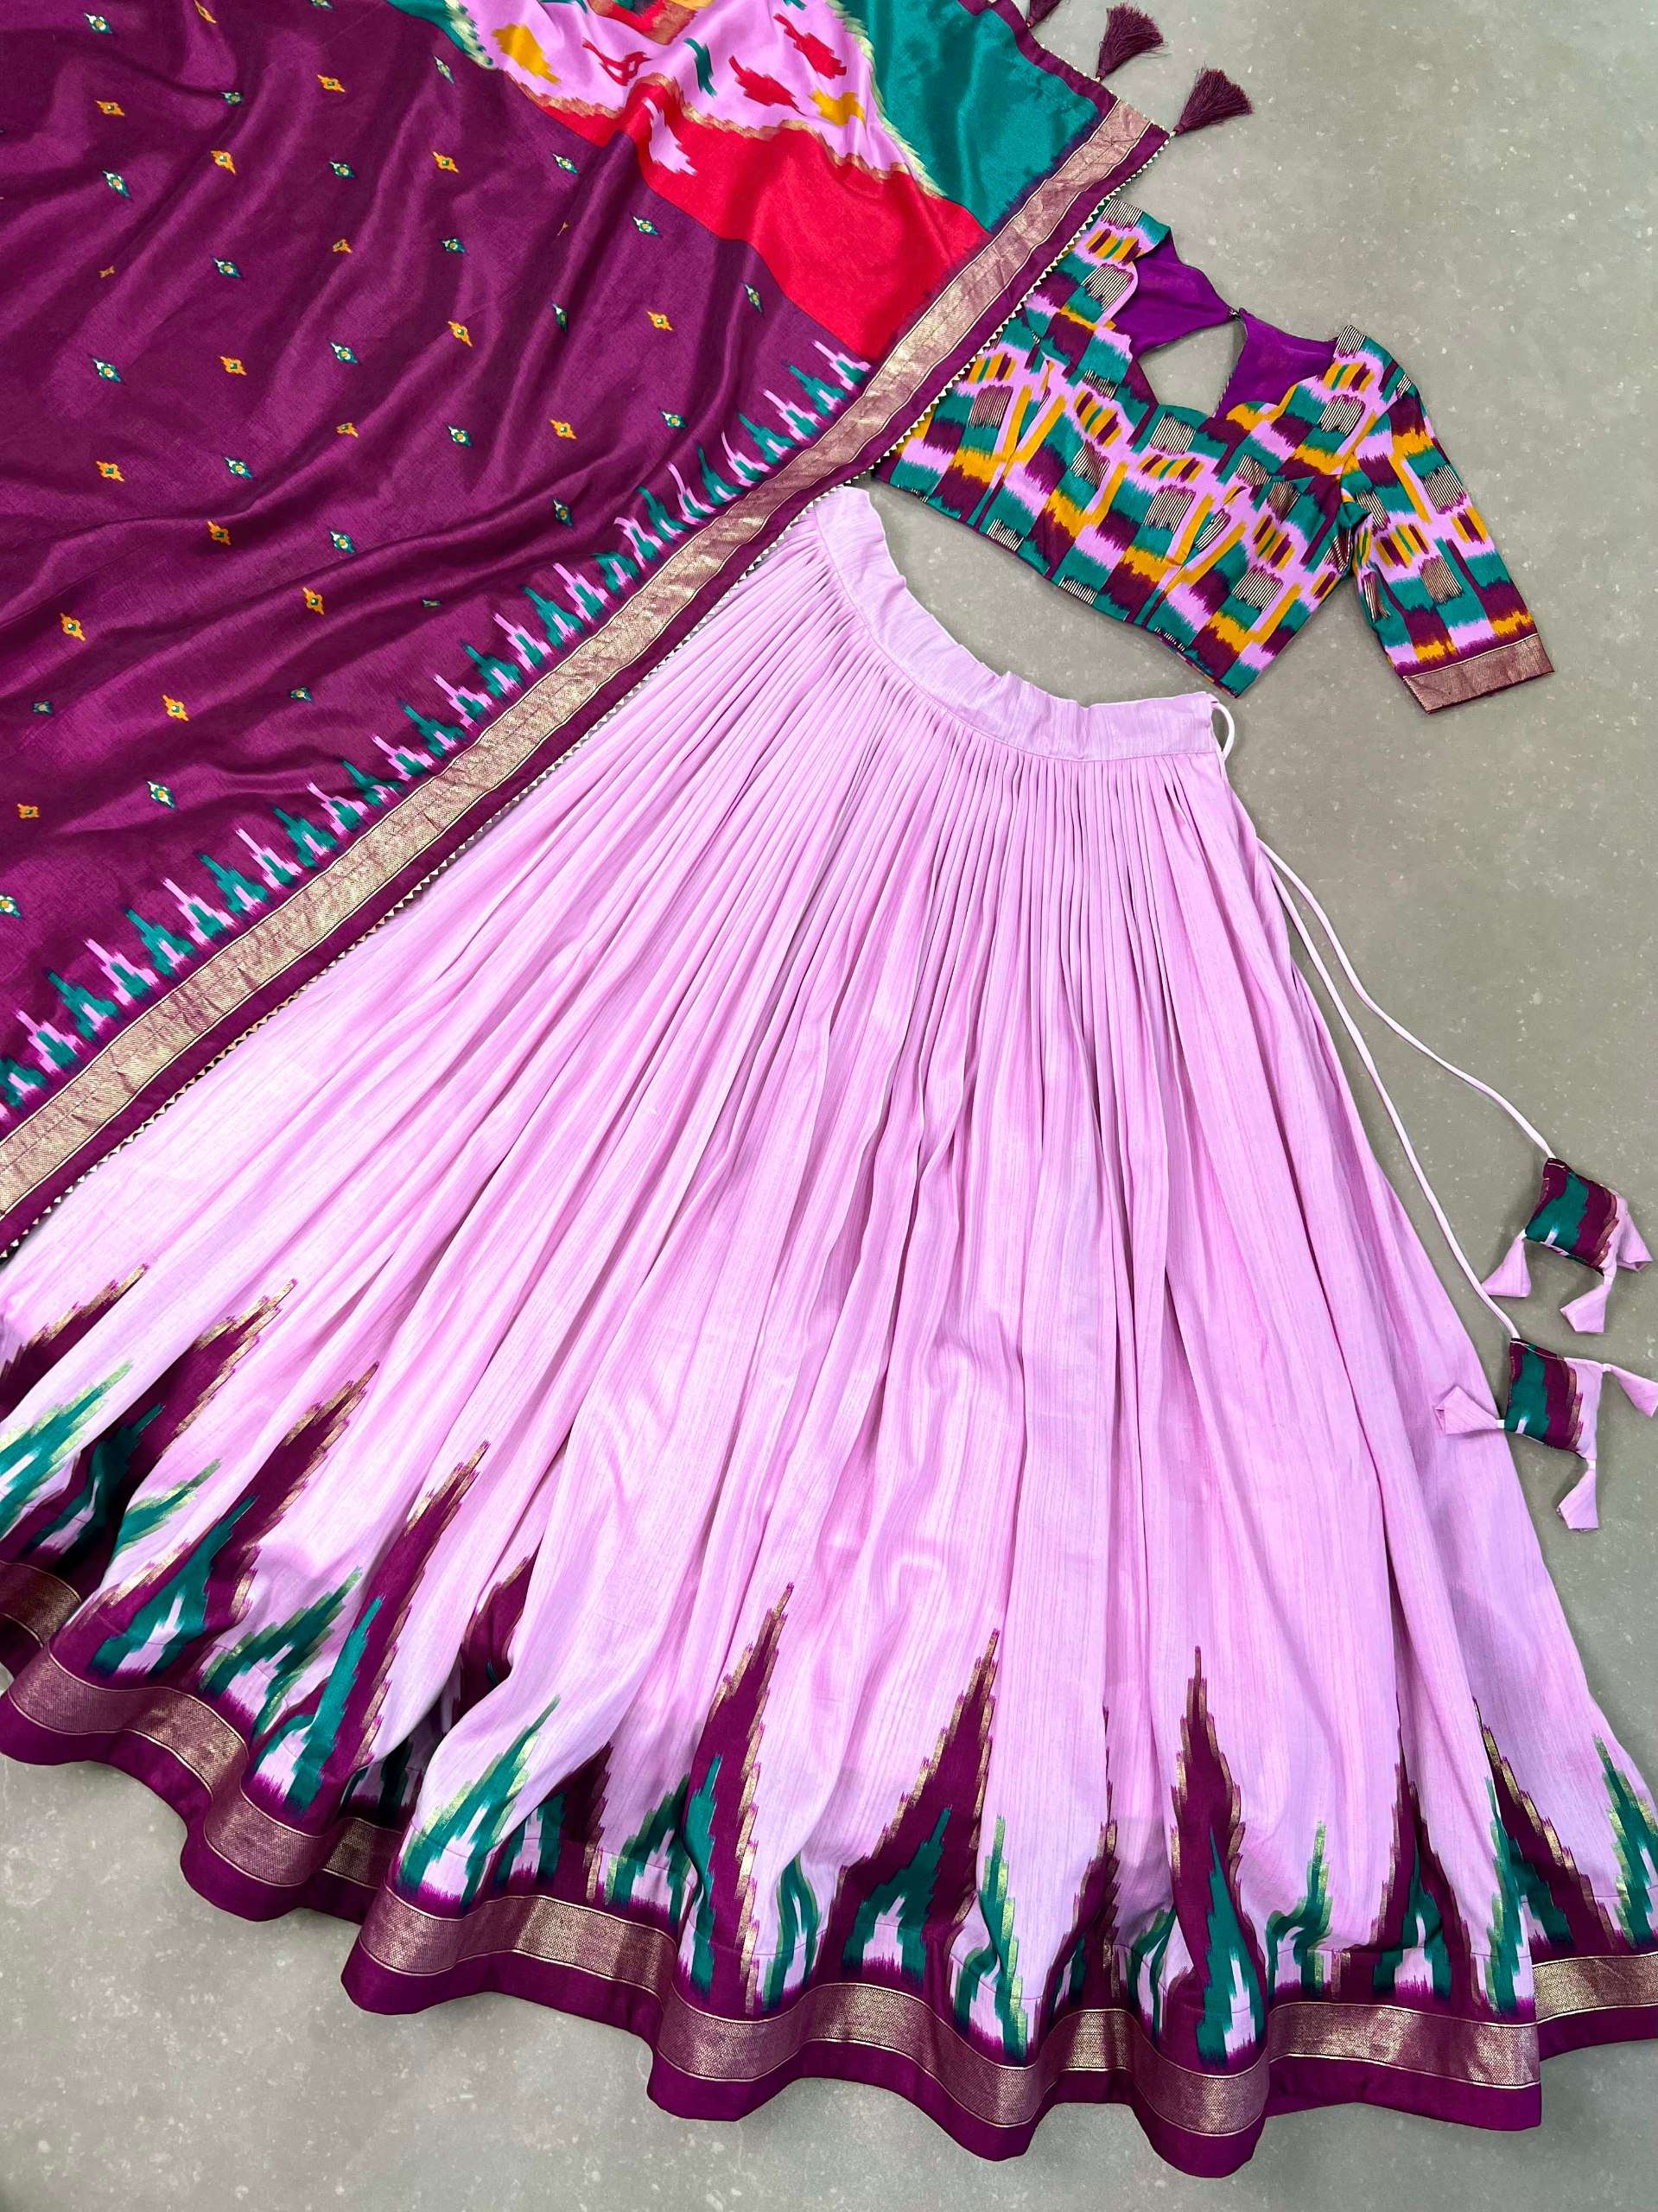 lightweight yet luxurious Tussar silk fabric ensures comfort...